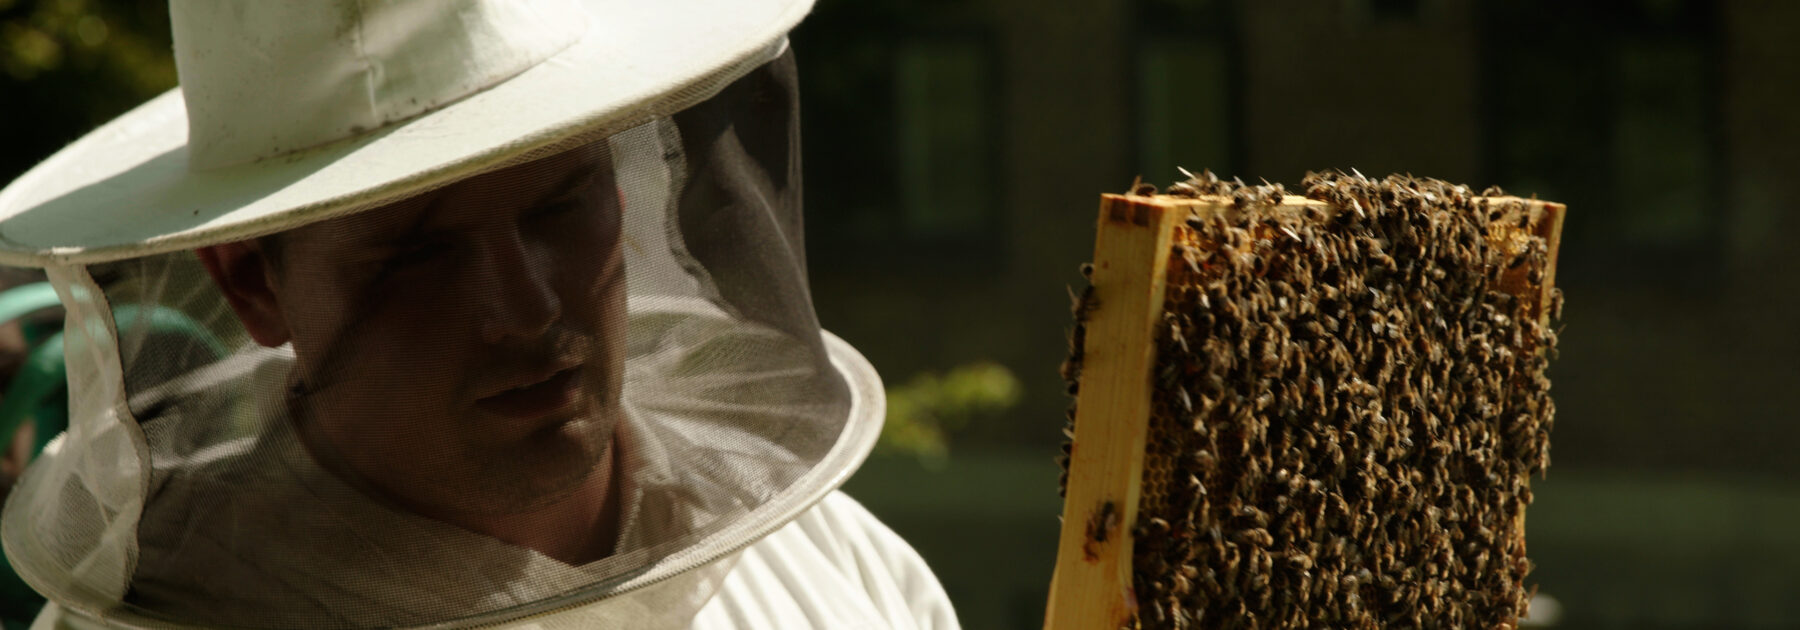 Bee-rilliant Honey Tasting